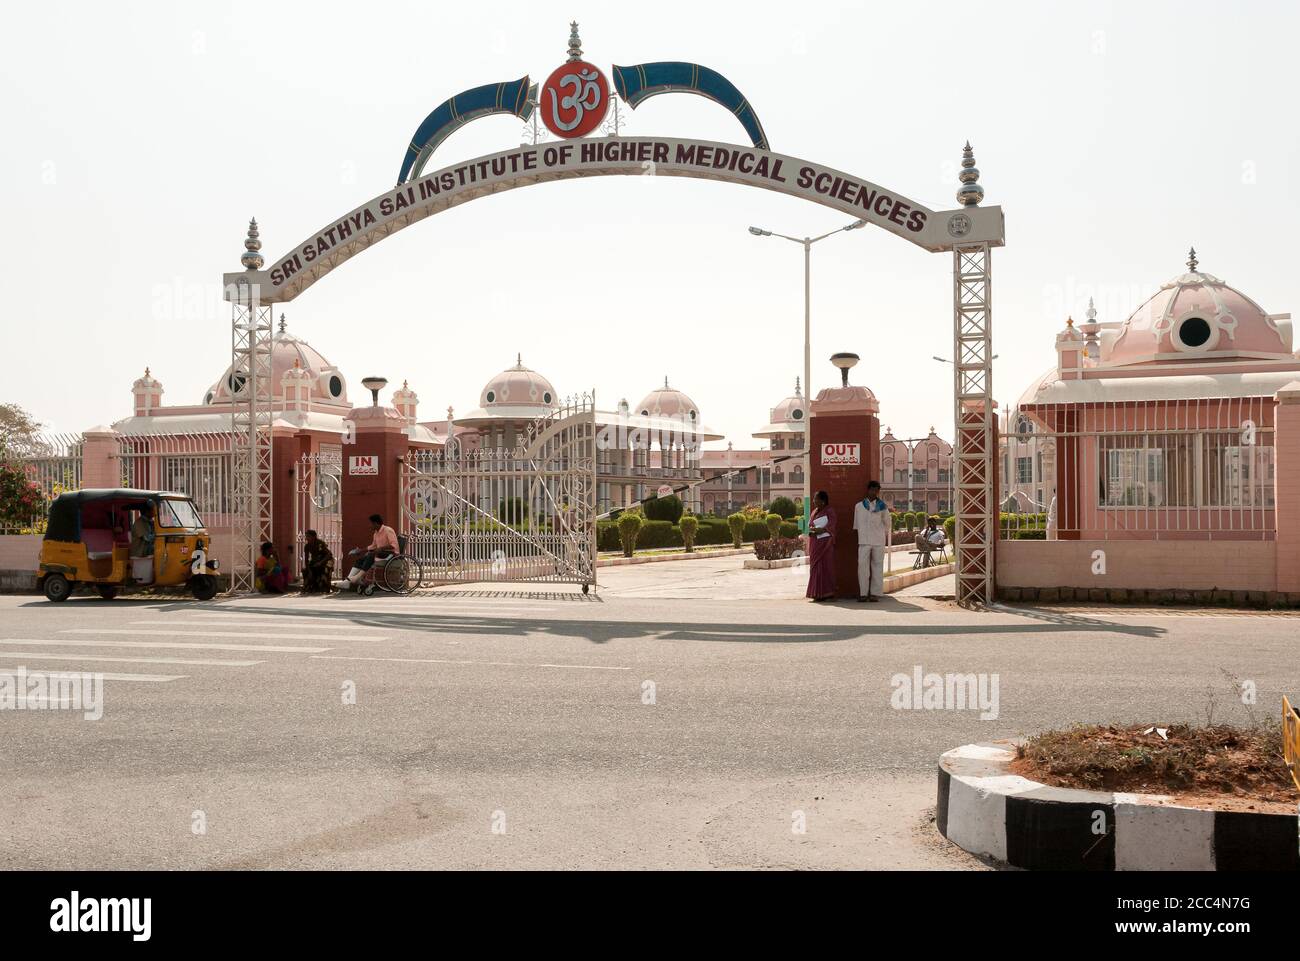 Puttaparthi, Andhra Pradesh, India - January 11, 2013: Entrance of the Sri Sathya Sai Institute of Higher Medical Sciences, care medical centre based Stock Photo